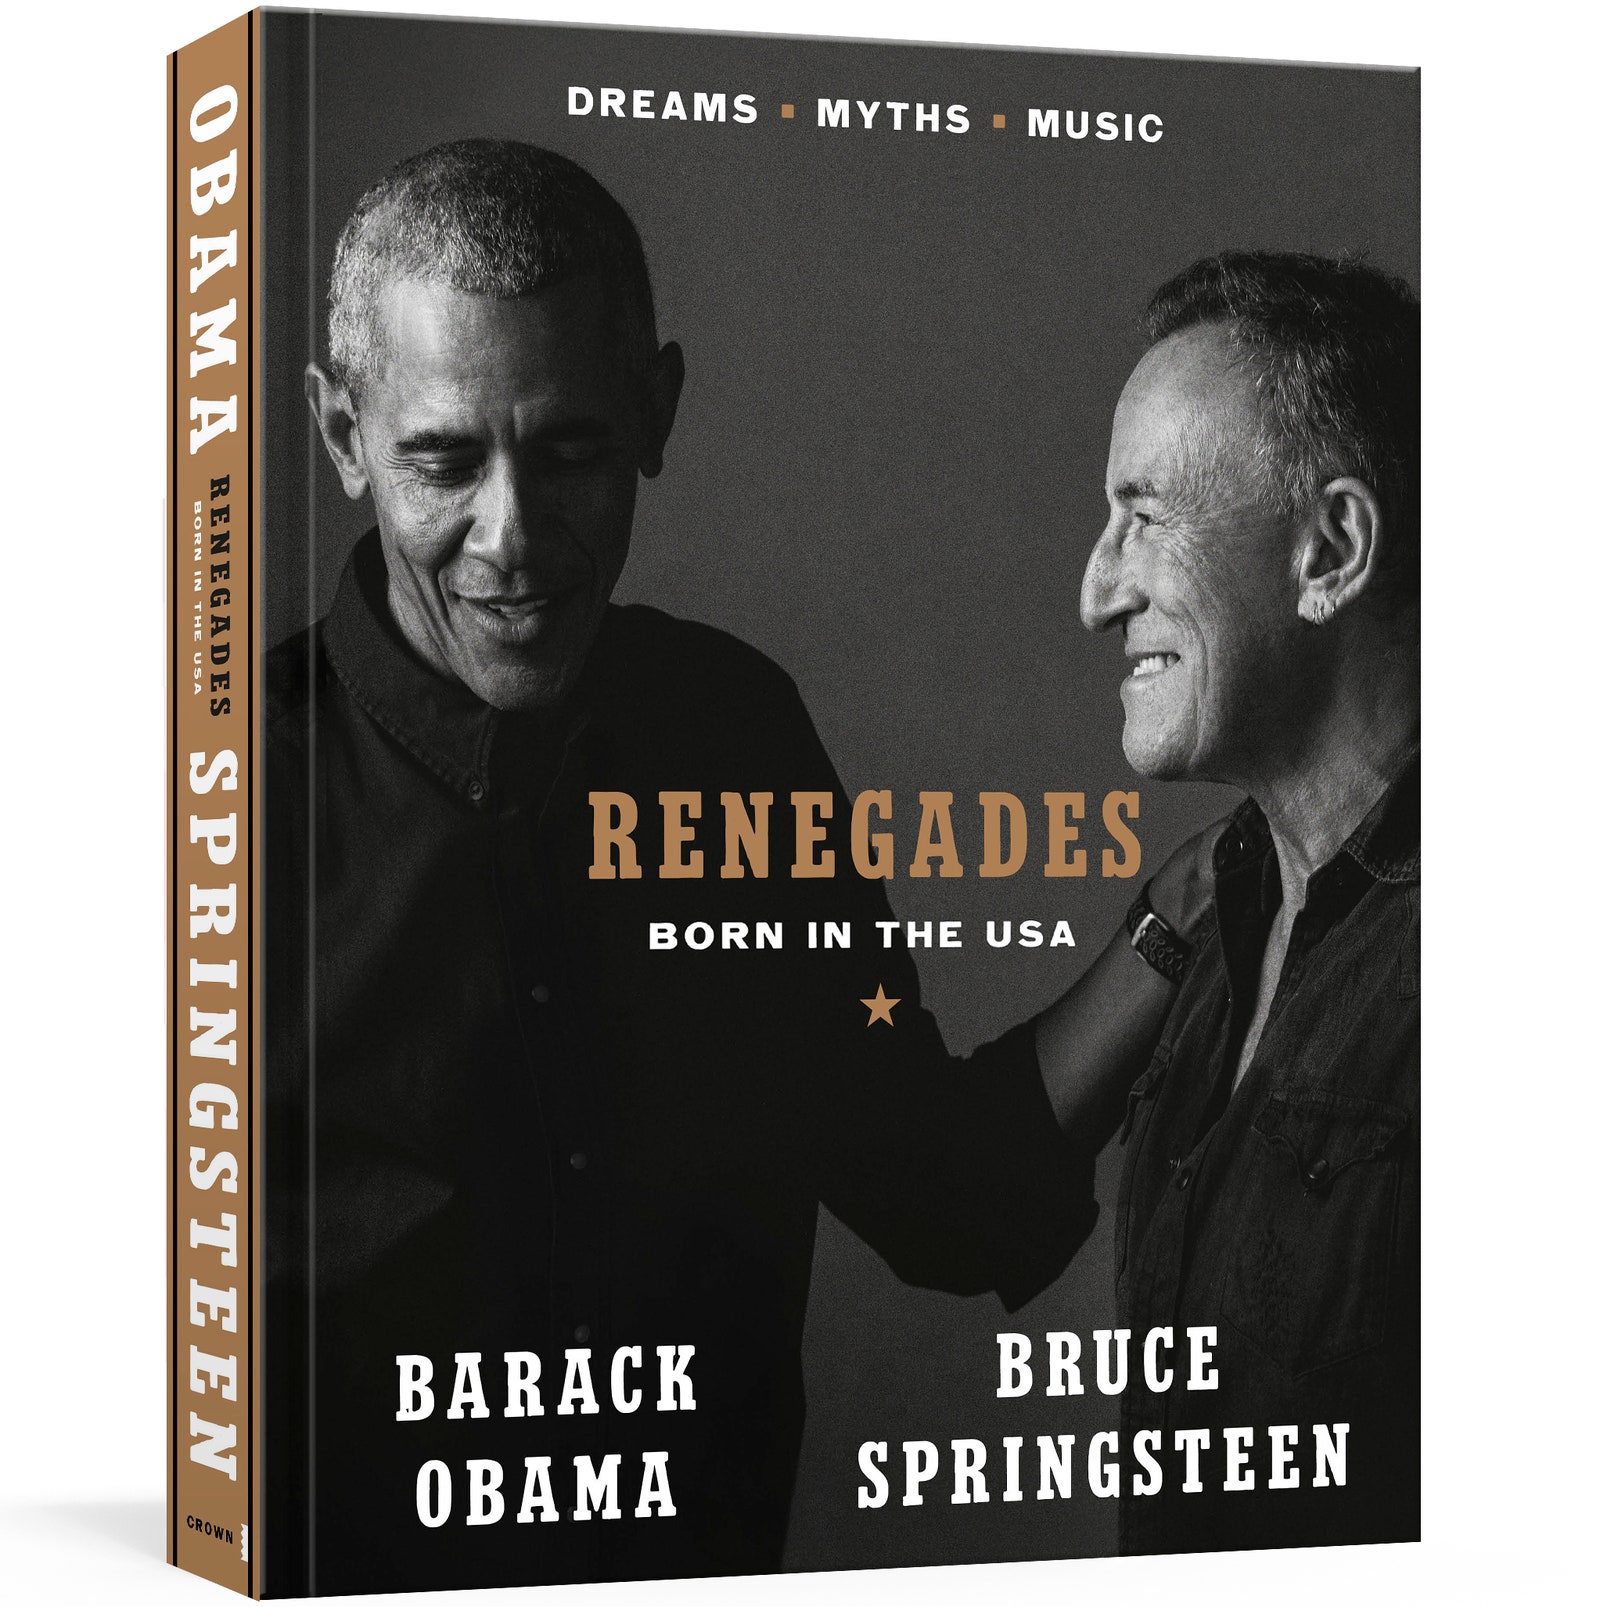 Bruce Springsteen et Barack Obama publient un livre